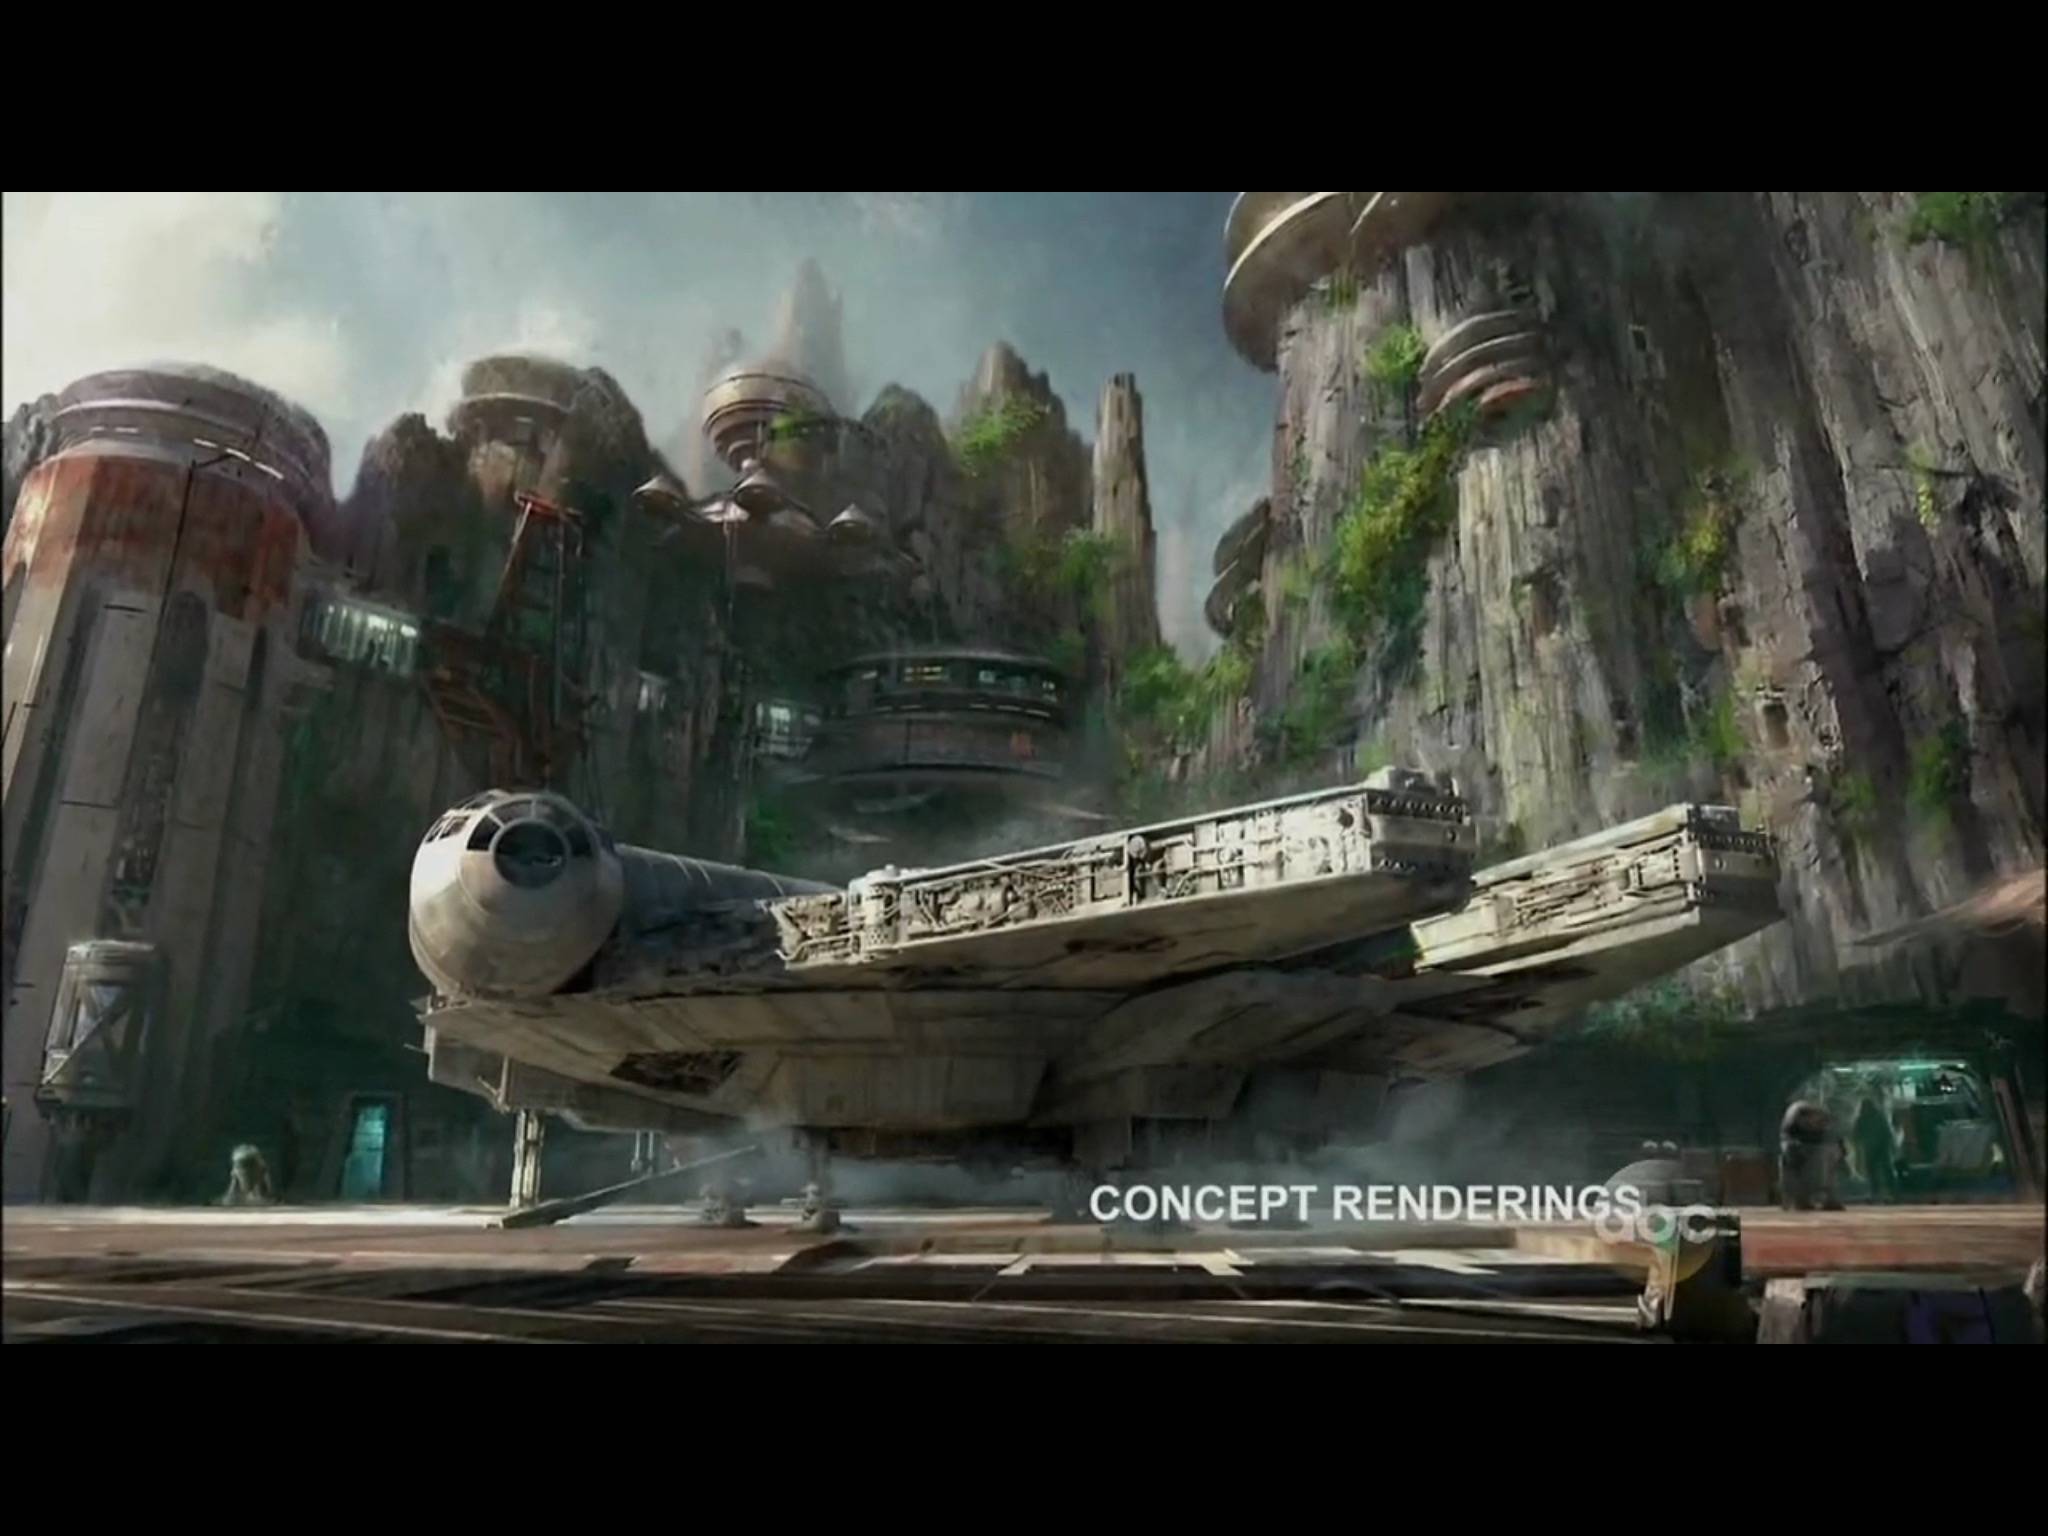 Star Wars Land concept art from Disneyland 60 Celebration Show